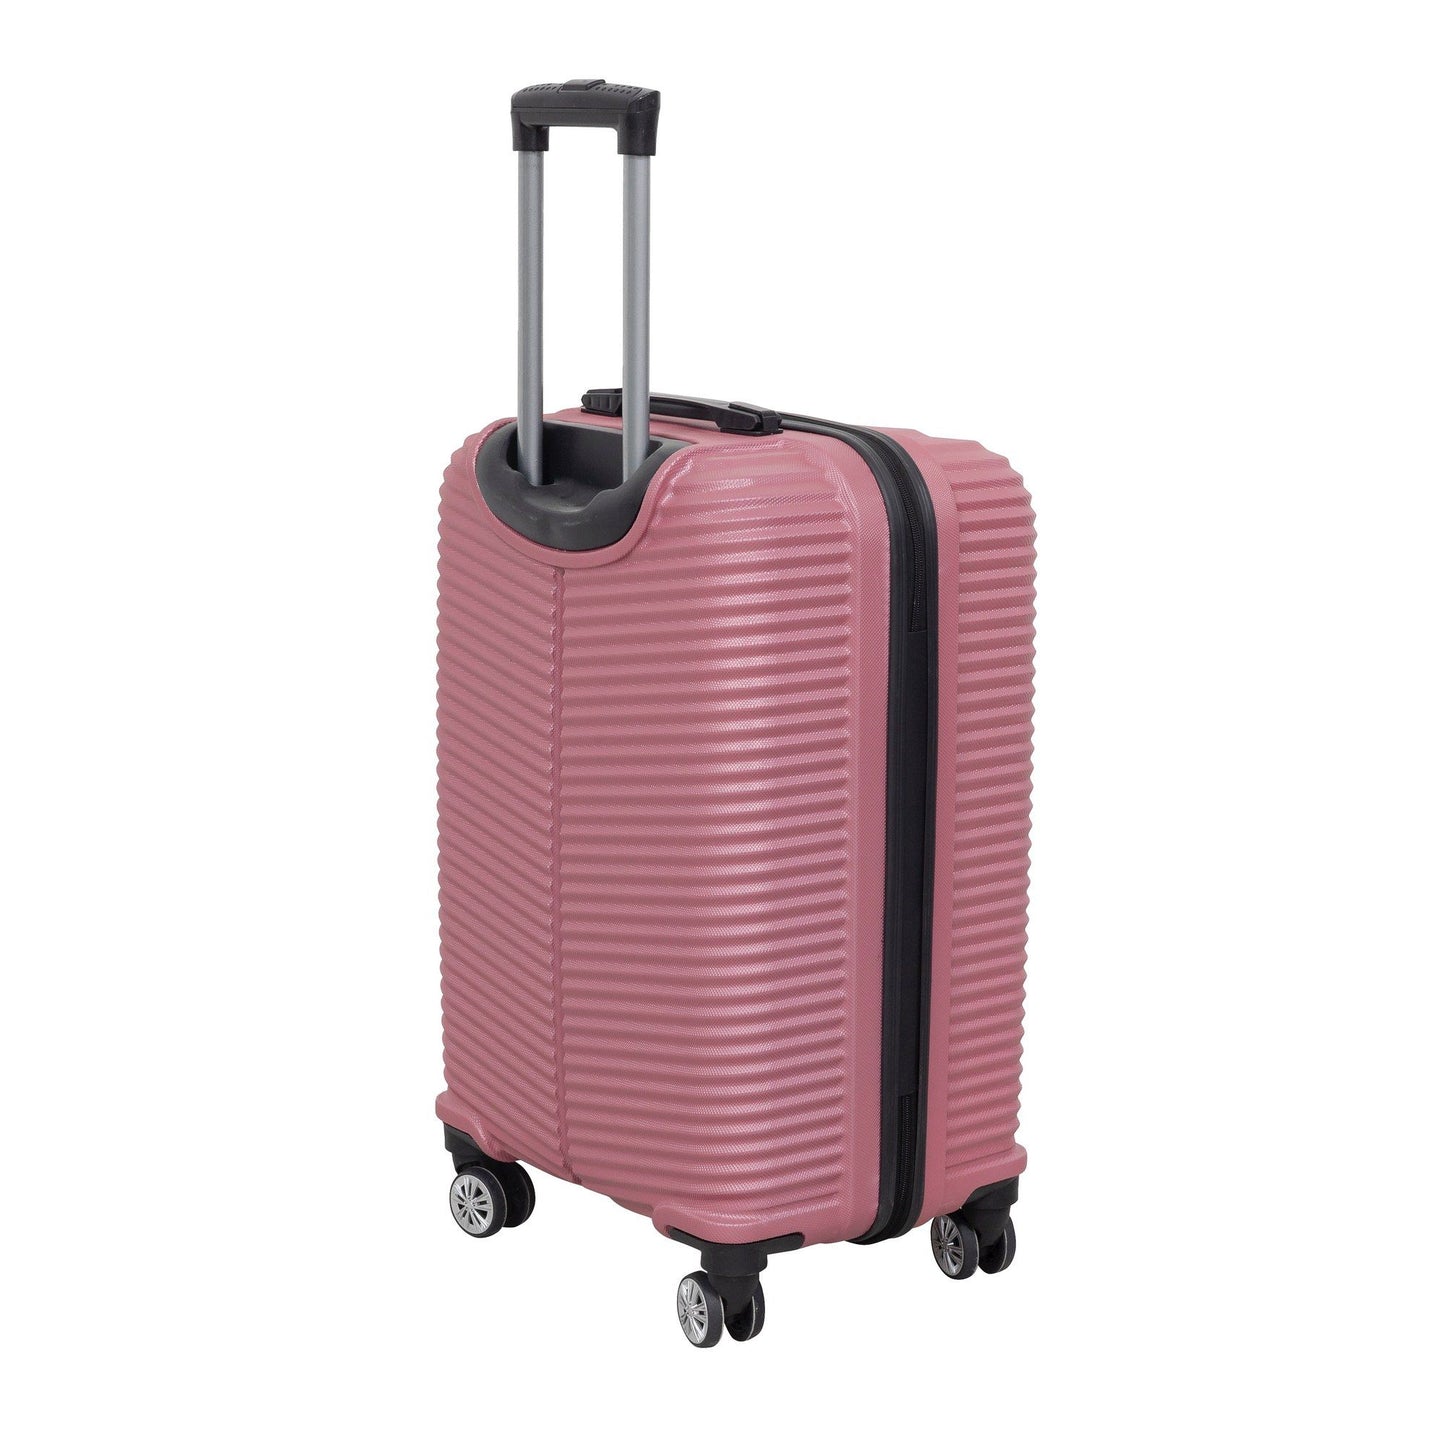 Pisa kuffert - 70L  - Rosa guld